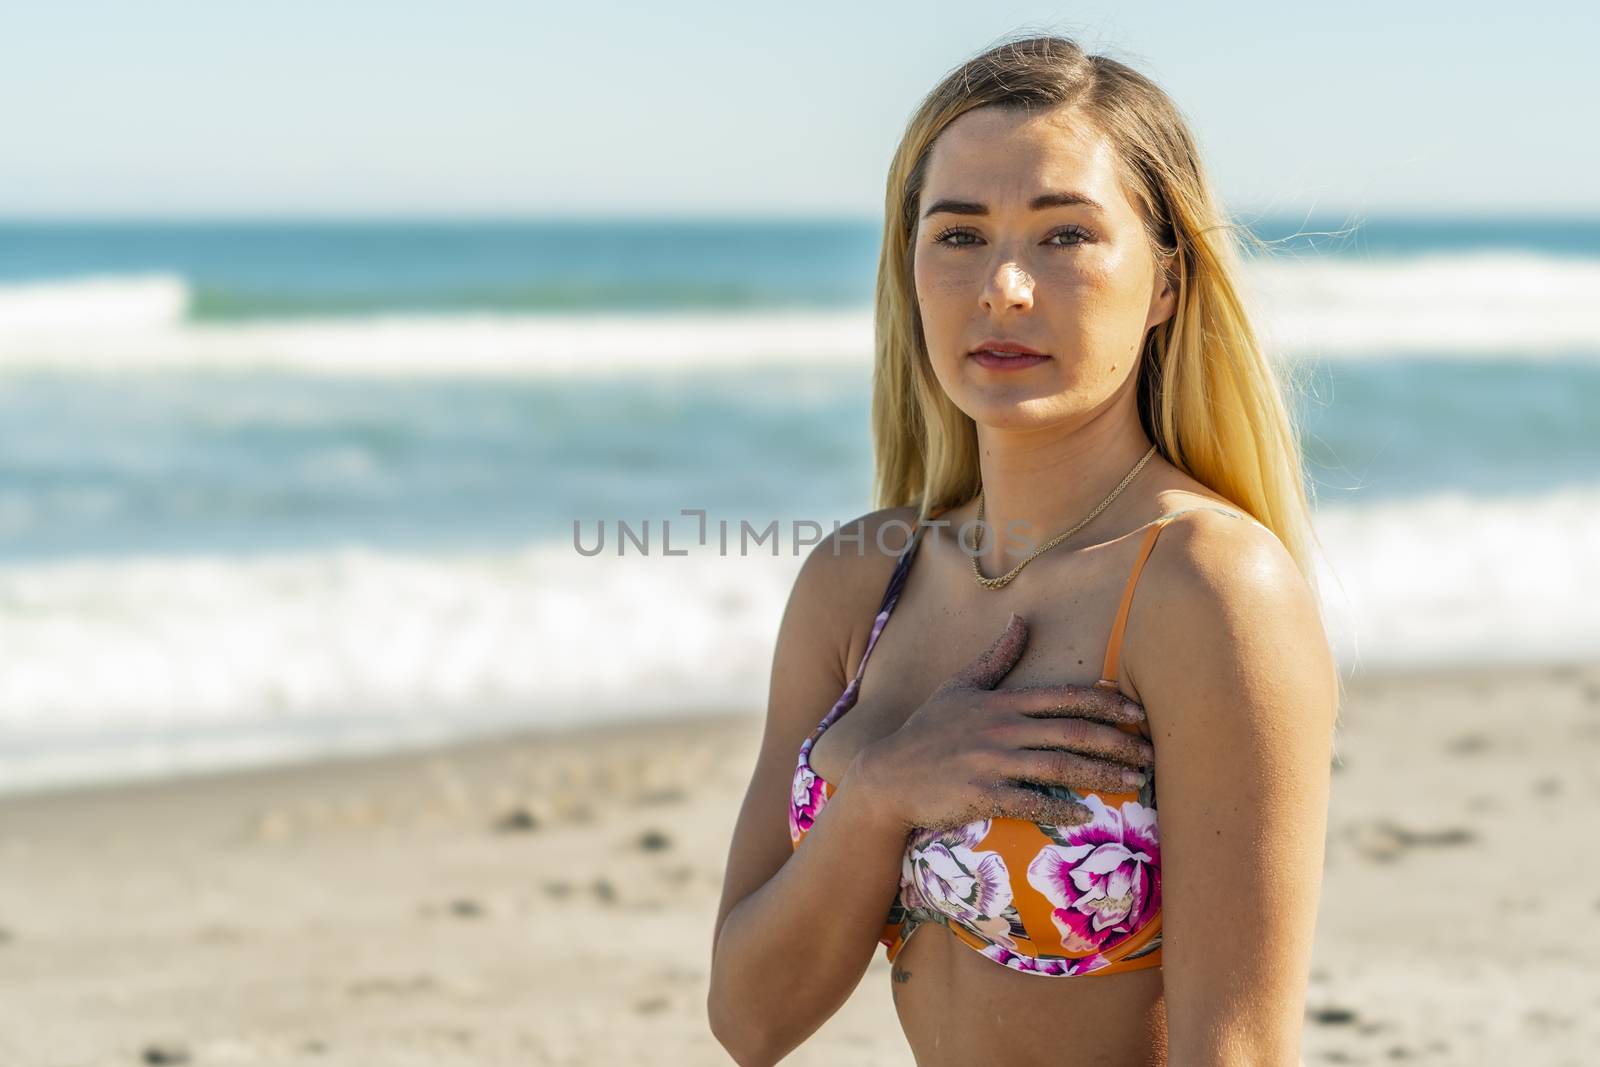 Beautiful Bikini Model Posing In A Beach Environment by actionsports